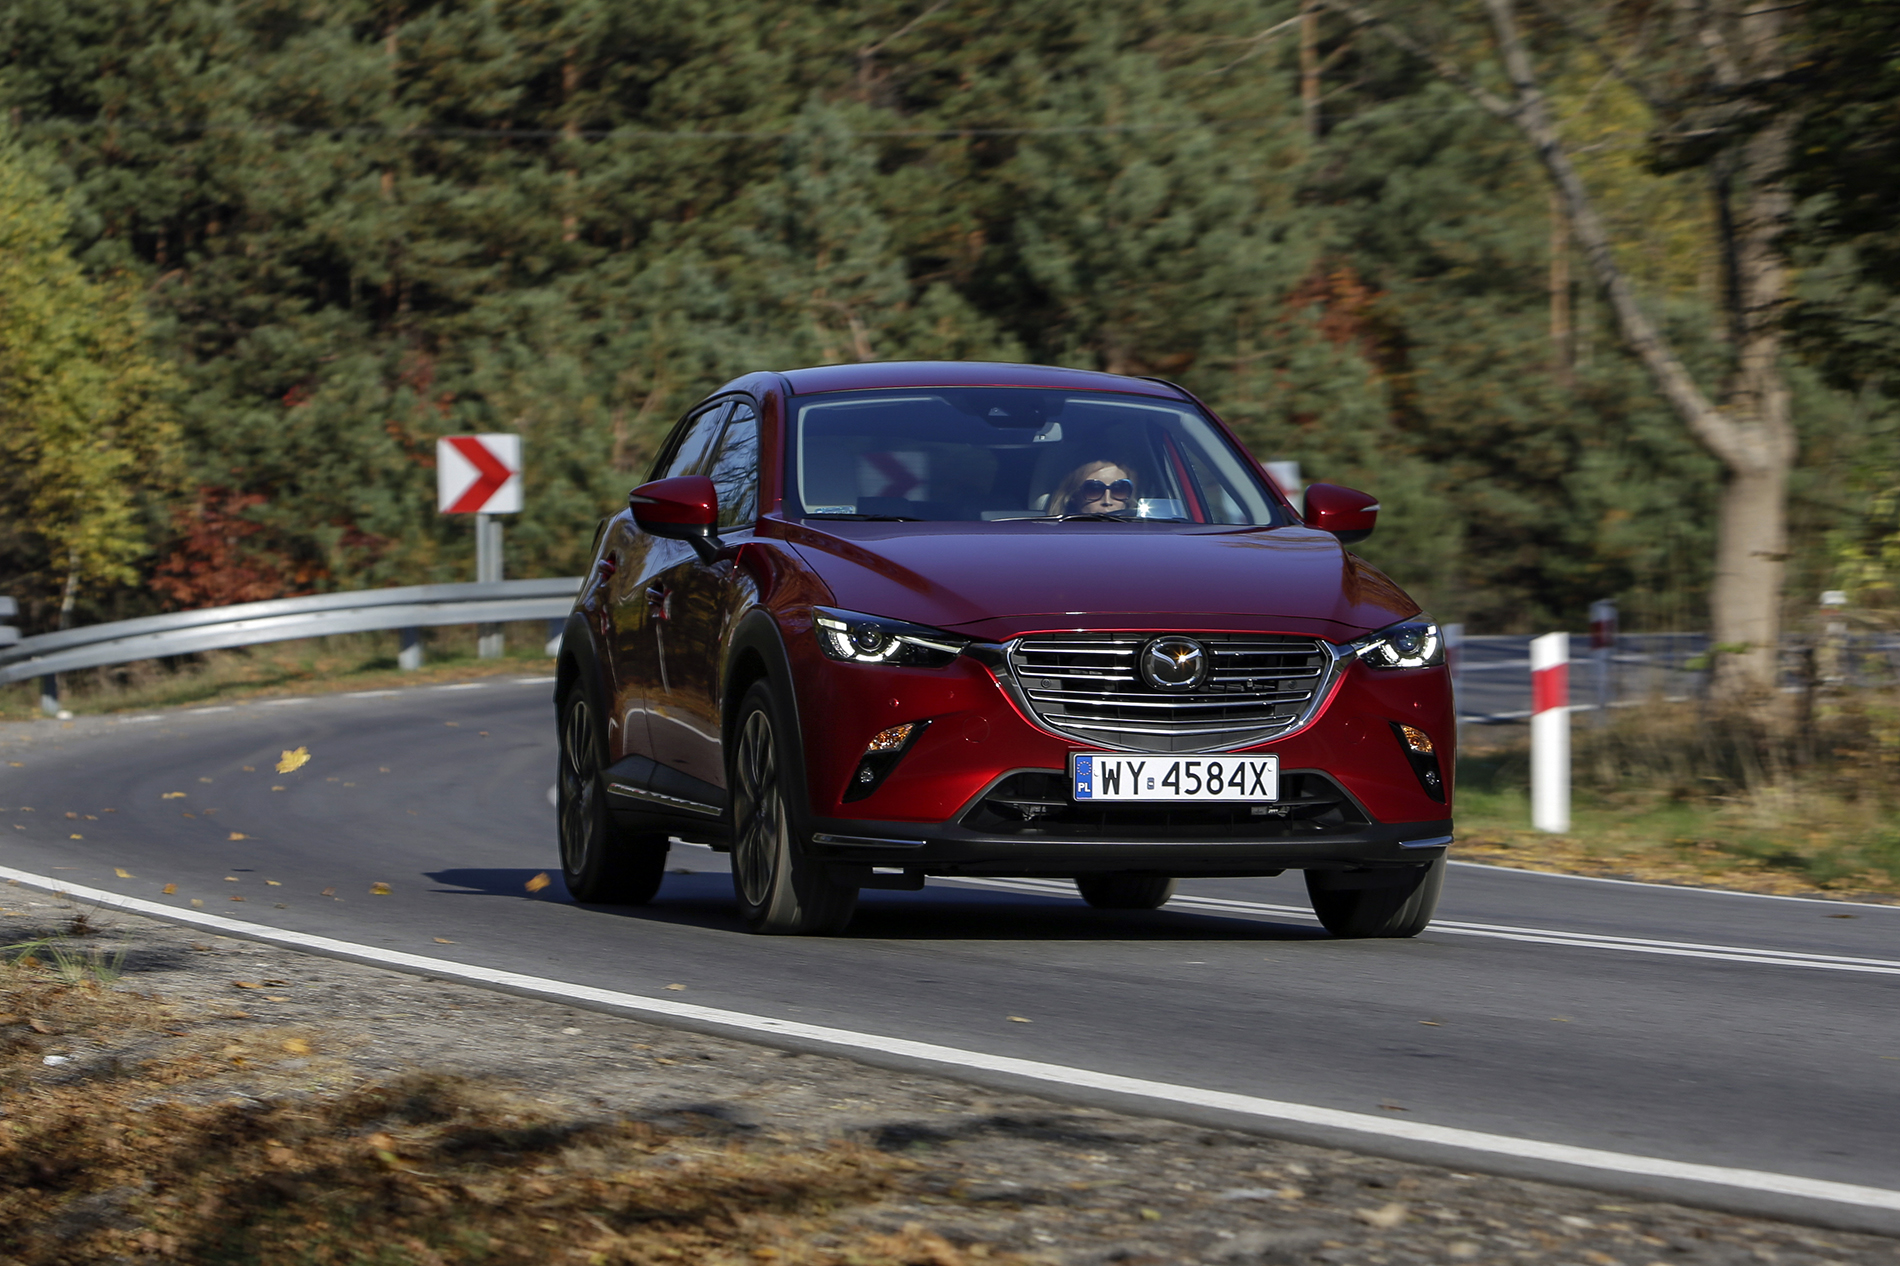 Mazda CX-3 bestsellerem segmentu B-SUV w Polsce